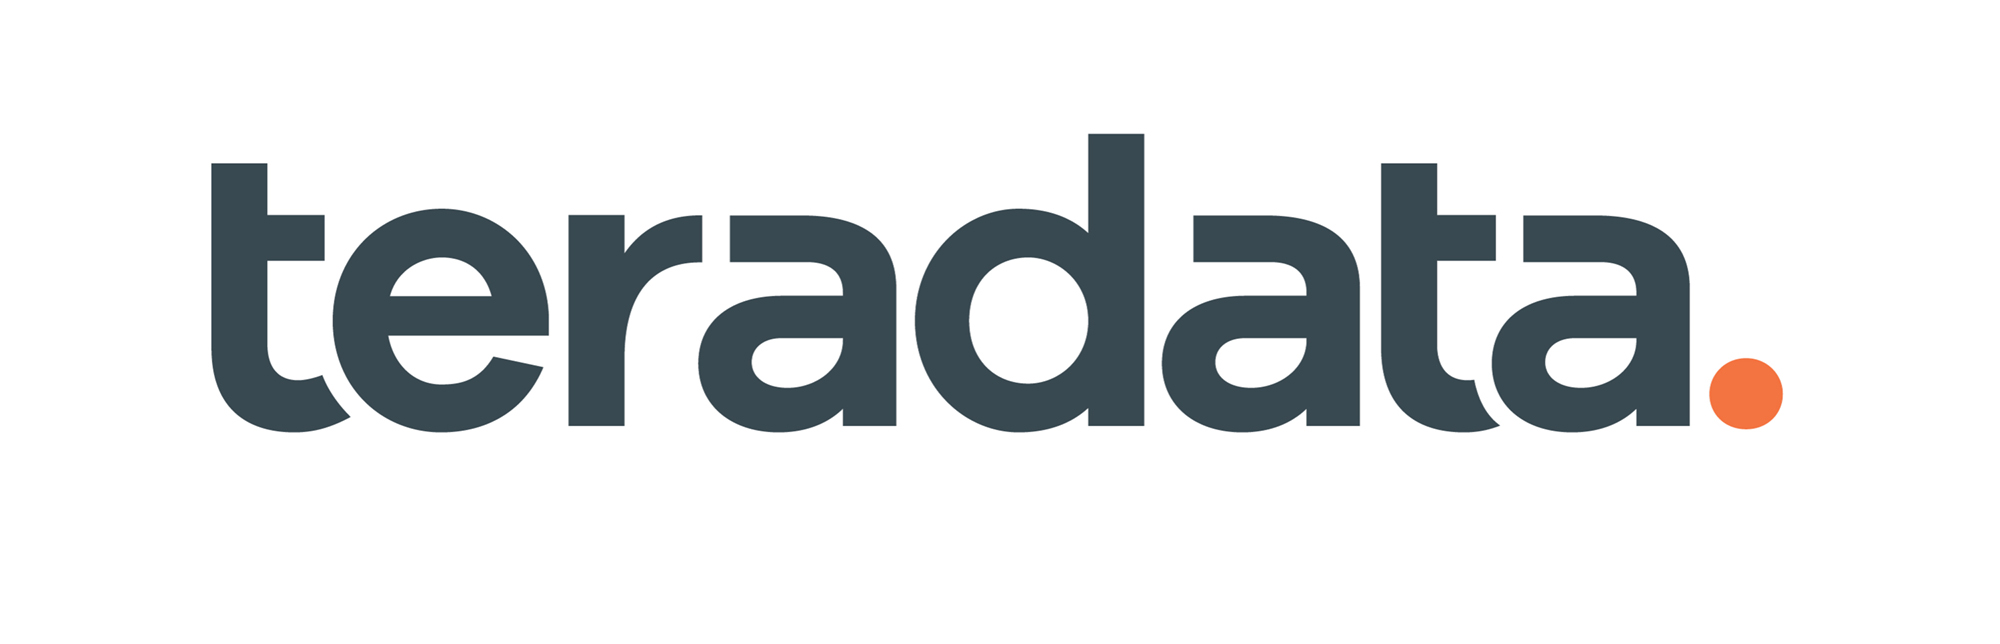 Teradata_logo-two_color